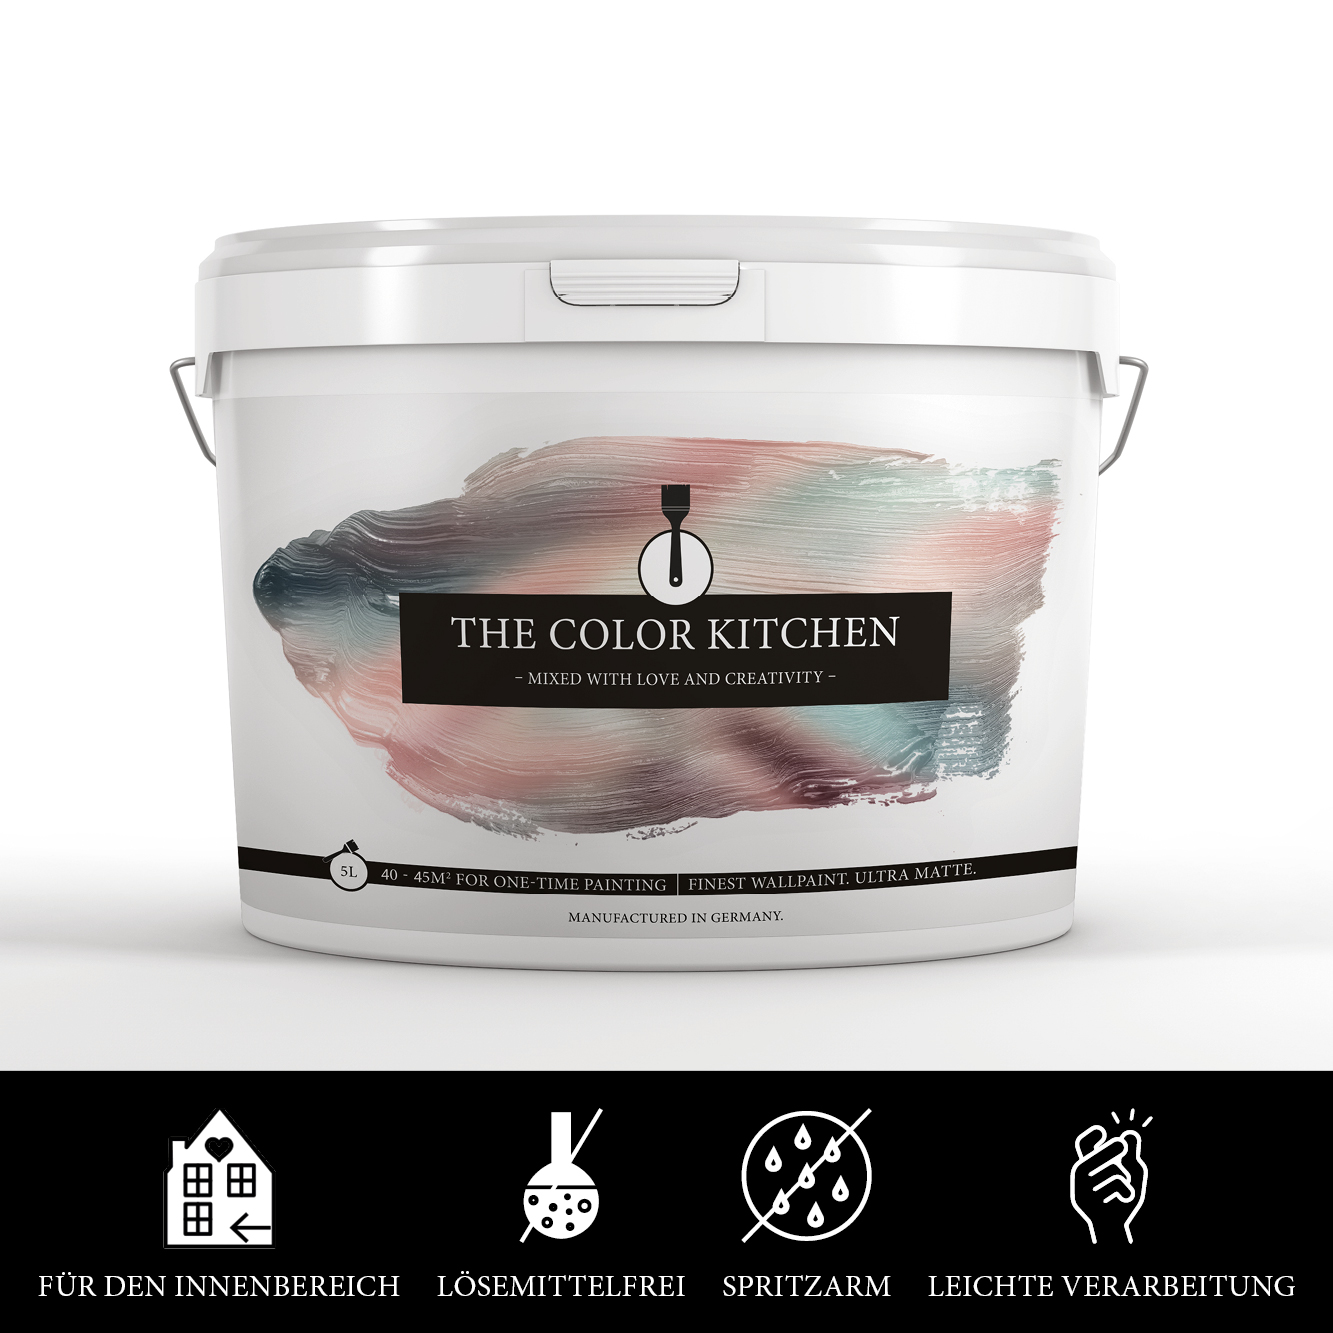 The Color Kitchen Calm Clam 5 l